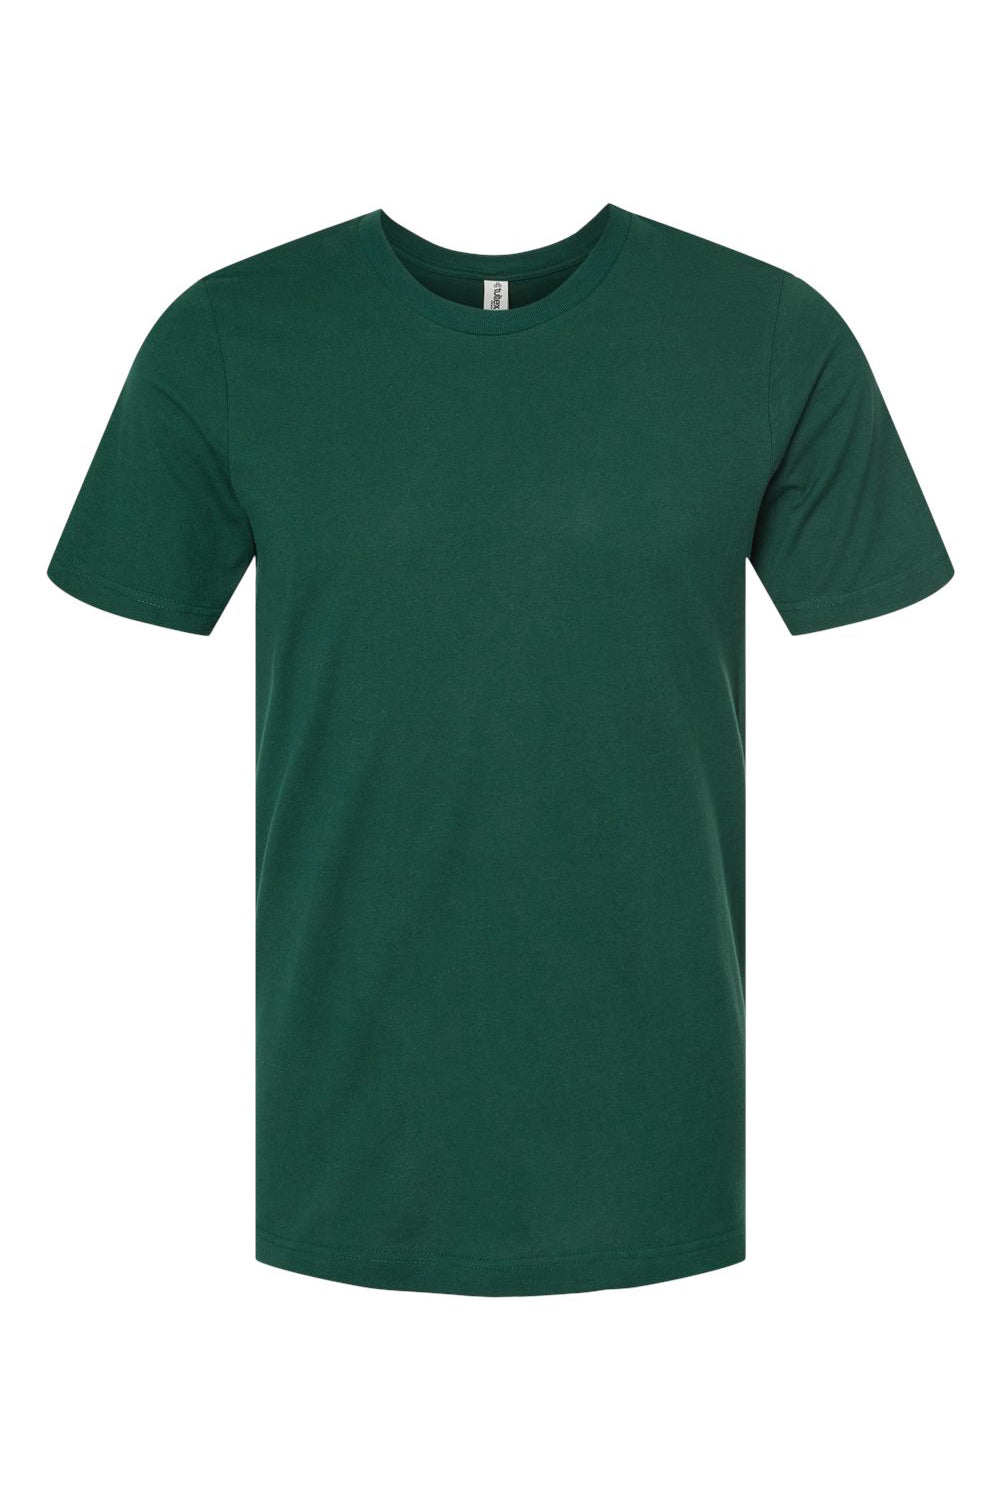 Tultex 502 Mens Premium Short Sleeve Crewneck T-Shirt Forest Green Flat Front